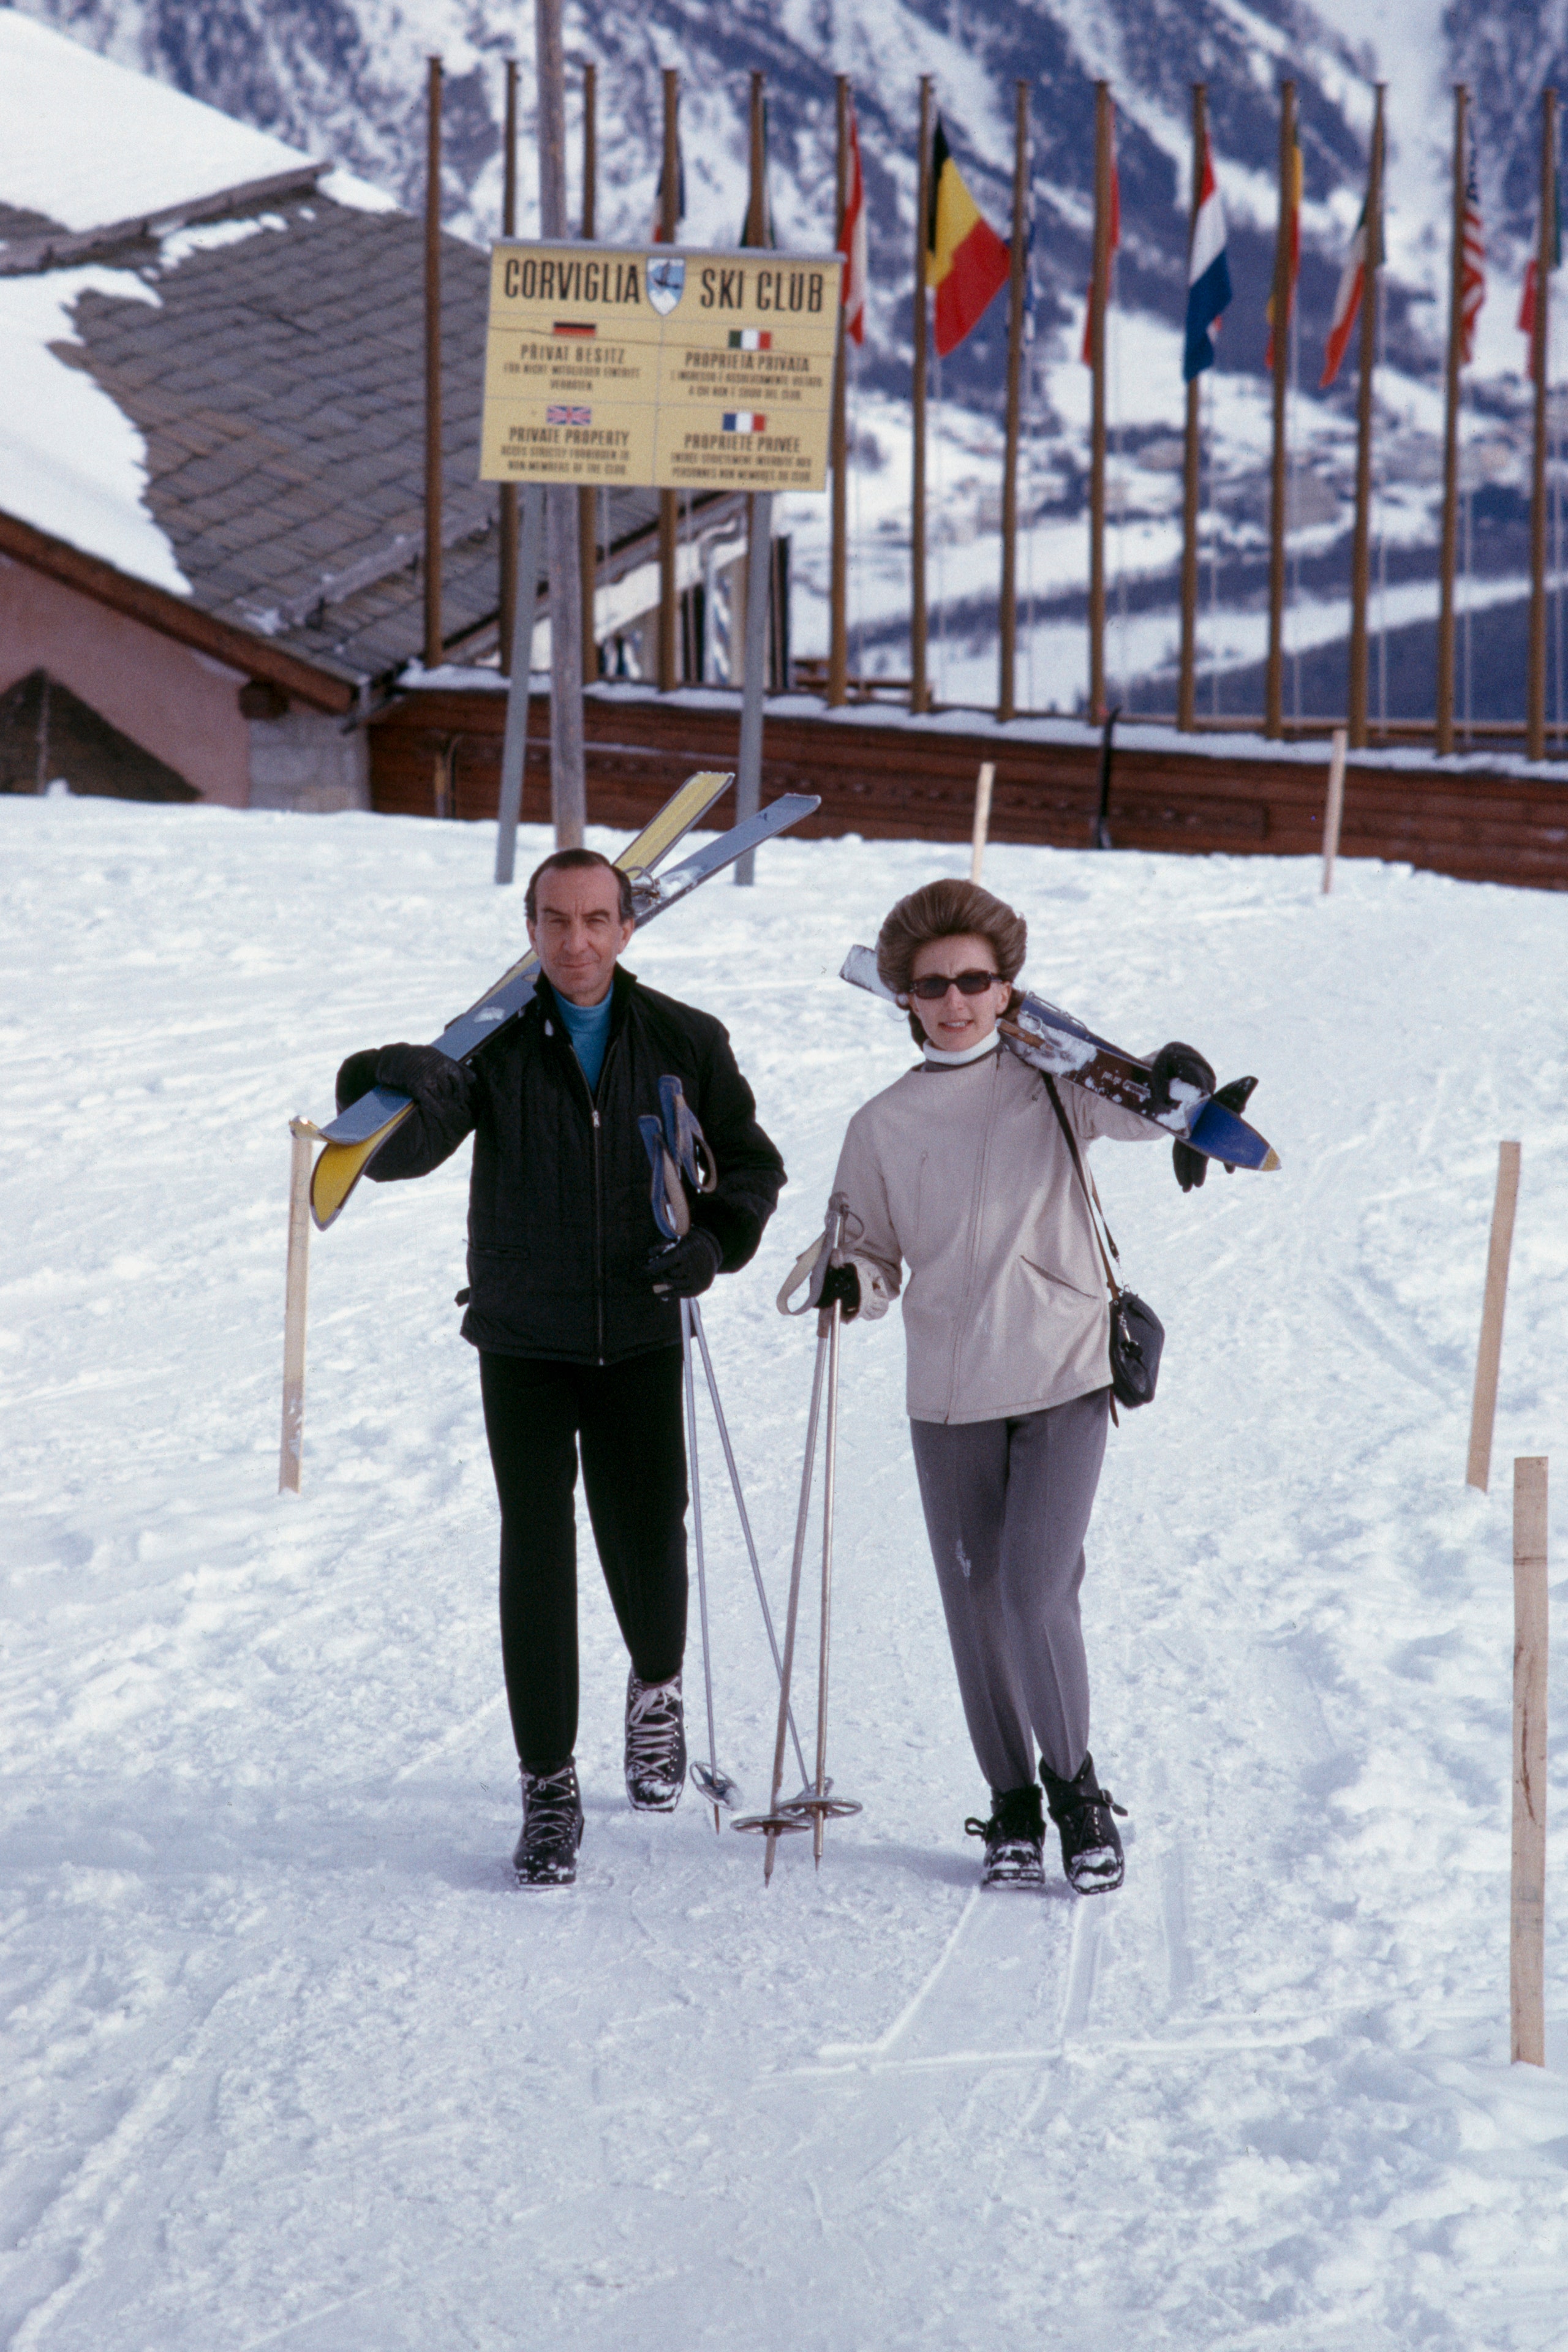 Skiers at the Corviglia Ski Club in St Moritz Switzerland March 1963.